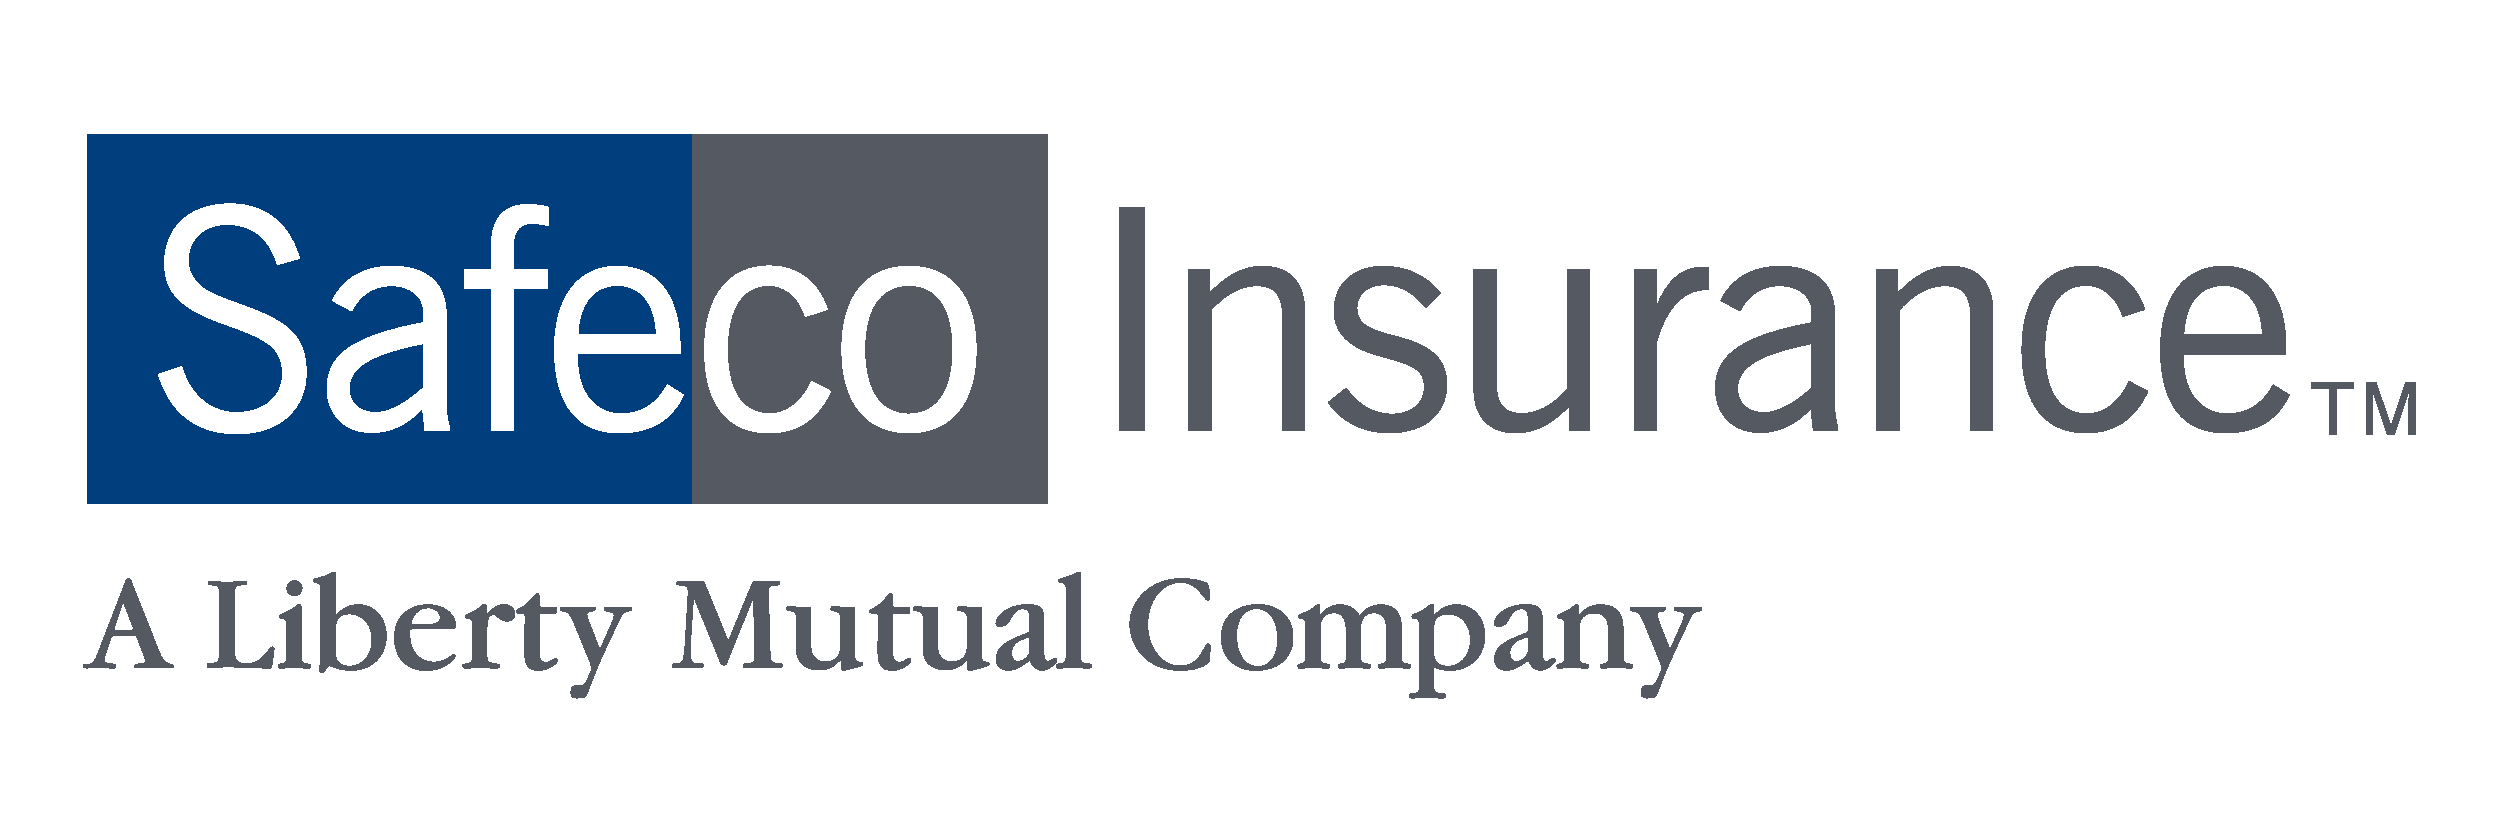 Safeco-Insurance-Logo.png